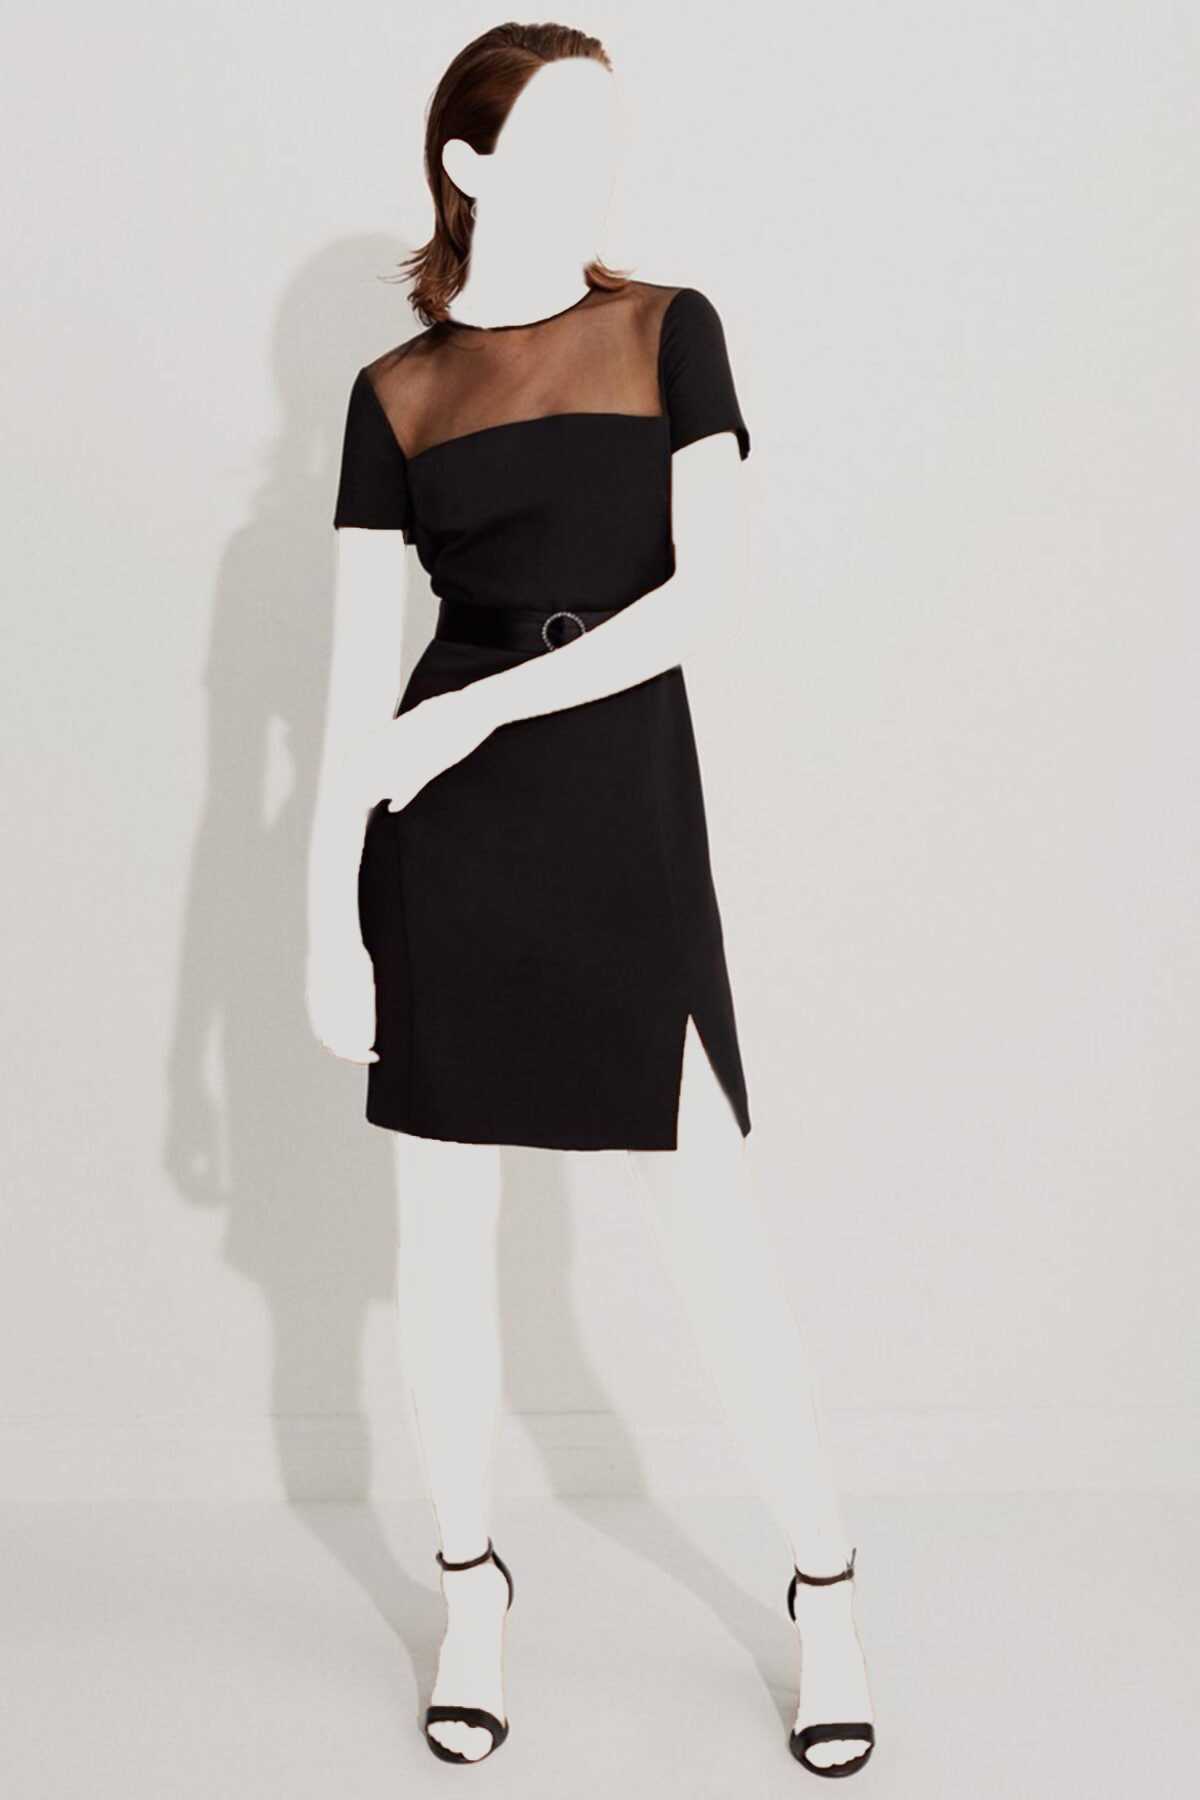 خرید اسان لباس مجلسی زنانه اسپرت جدید برند Perspective رنگ مشکی کد ty69799681